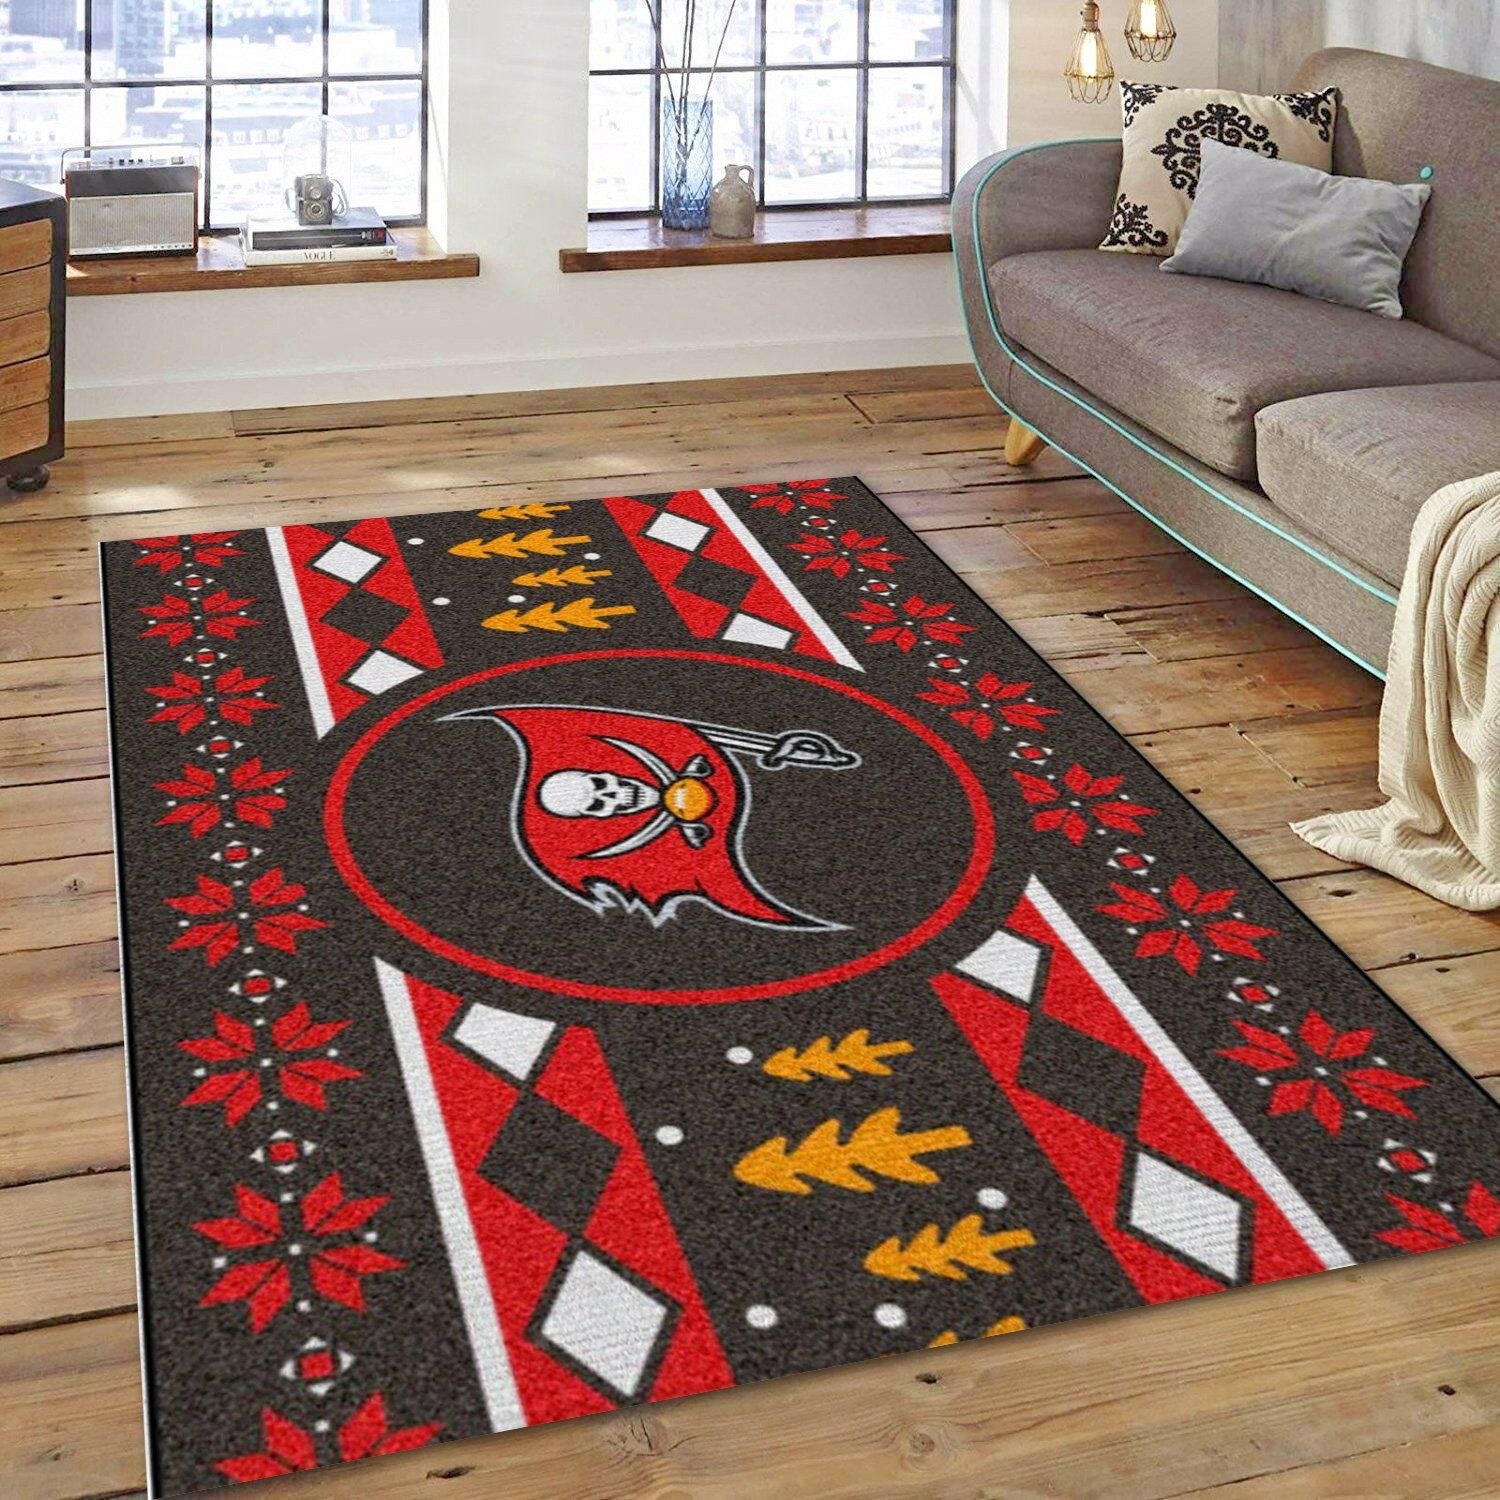 Buccaneers Nfl football Floor home decoration carpet rug